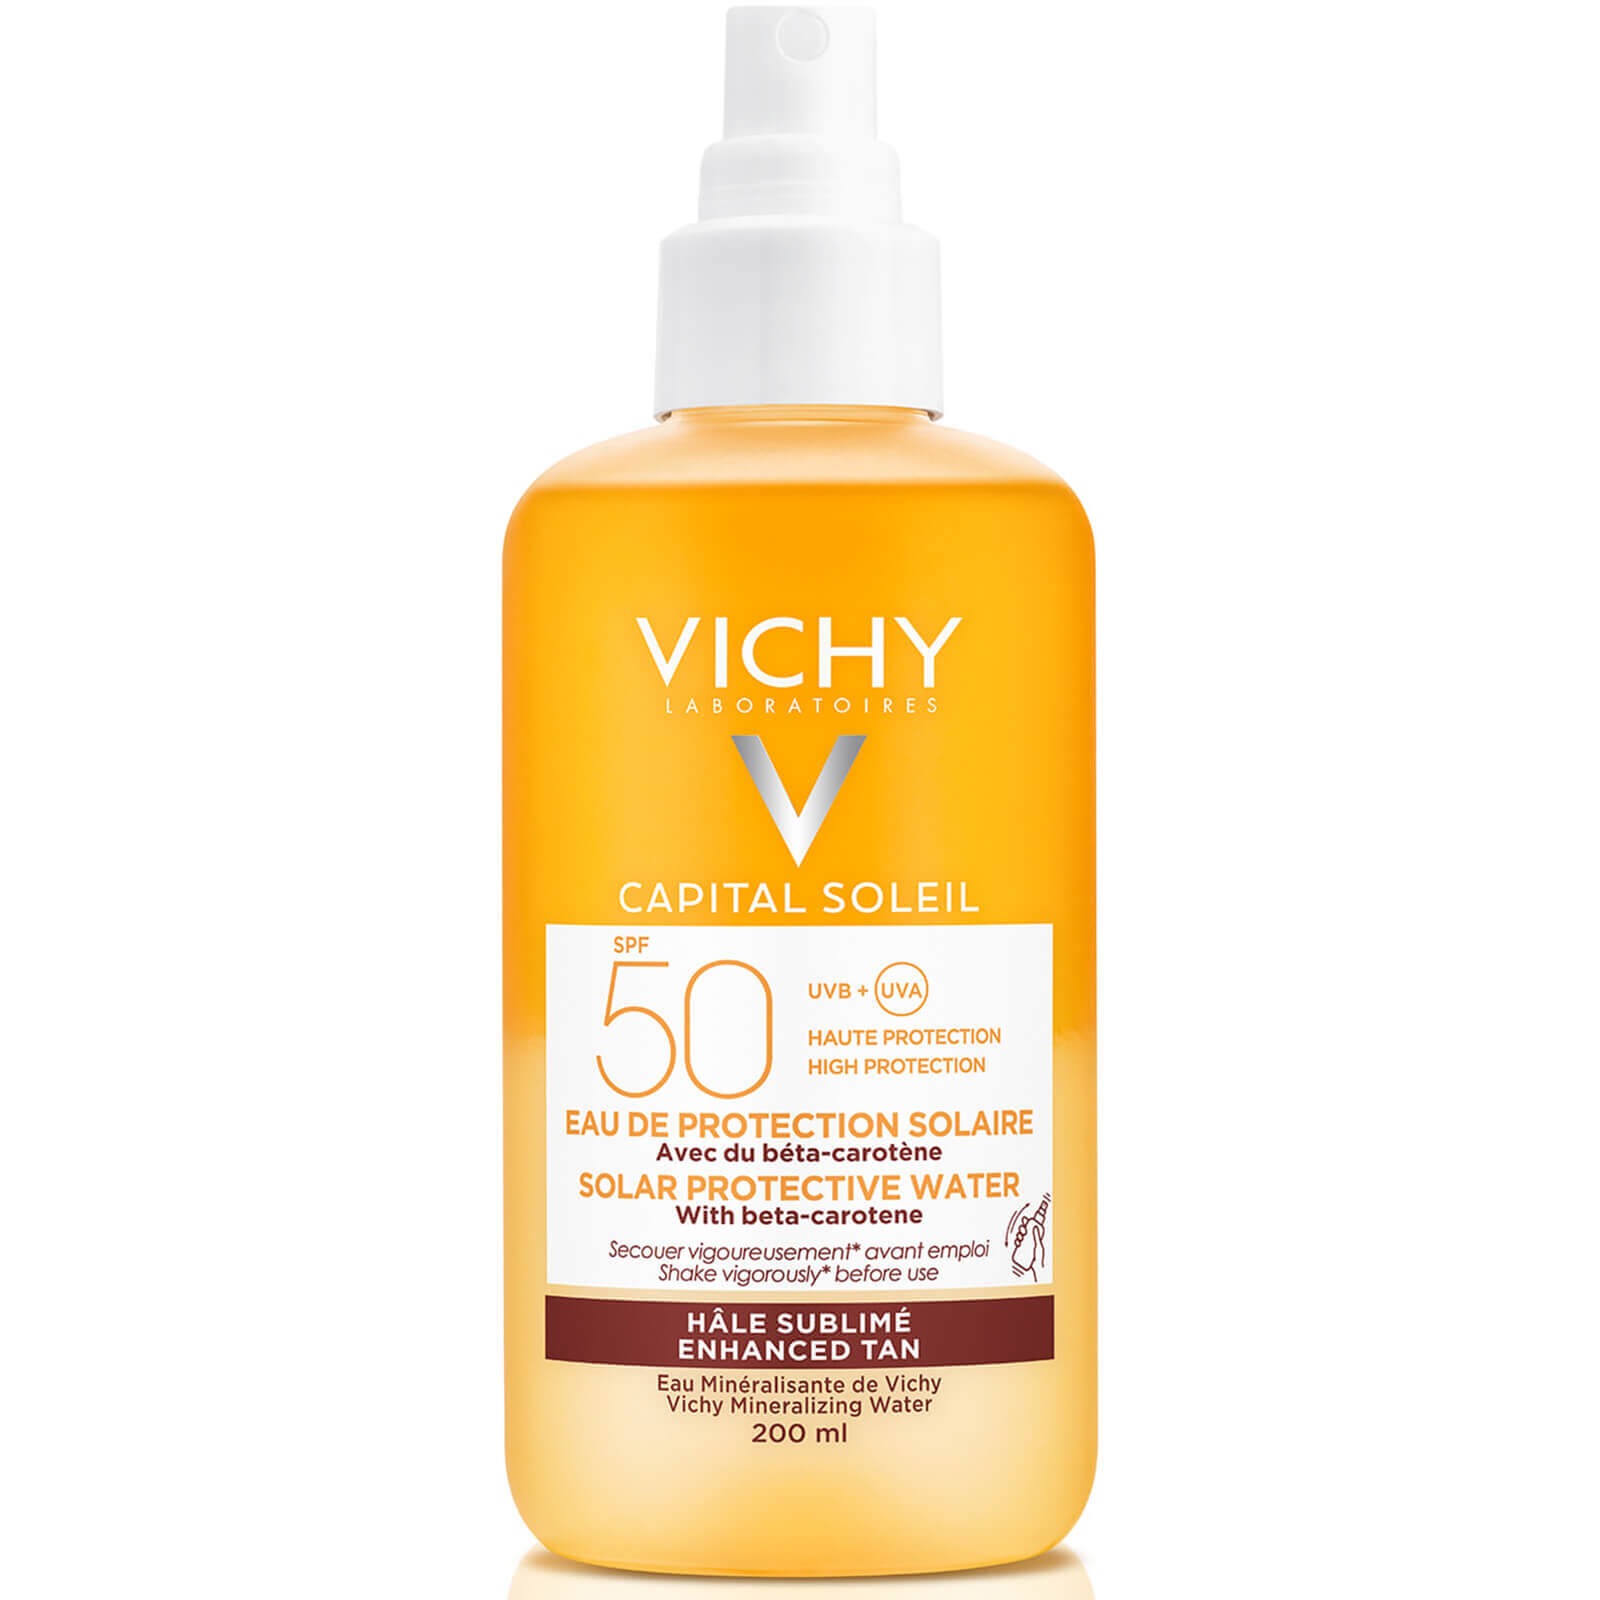 Photos - Sun Skin Care Vichy Capital Soleil Solar Protective Water Tan Enhance SPF50 200ml MB2324 